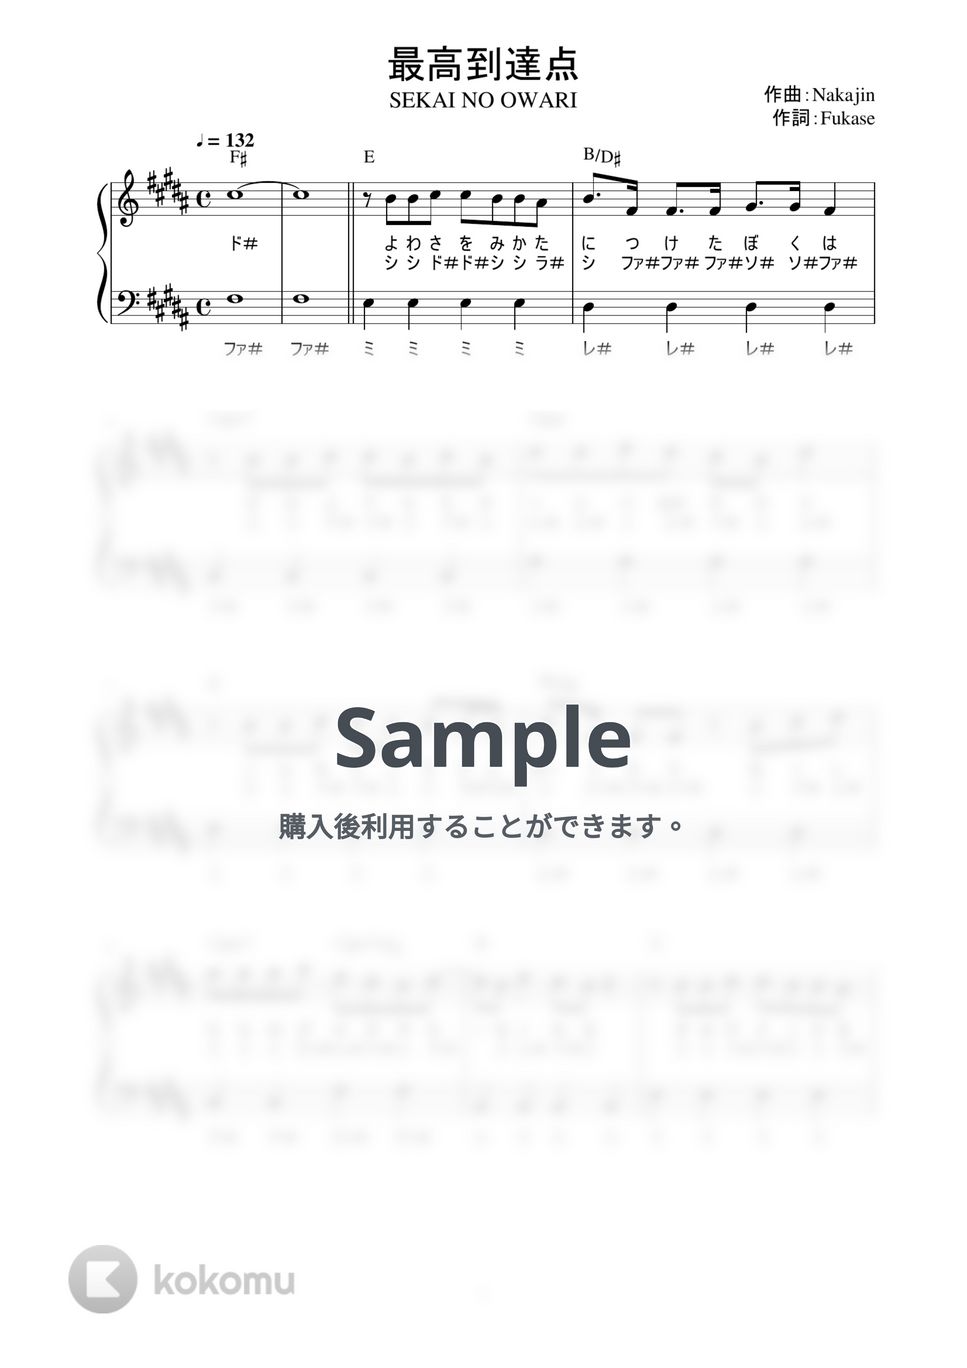 SEKAI NO OWARI - 最高到達点 (かんたん / 歌詞付き / ドレミ付き / 初心者) by piano.tokyo